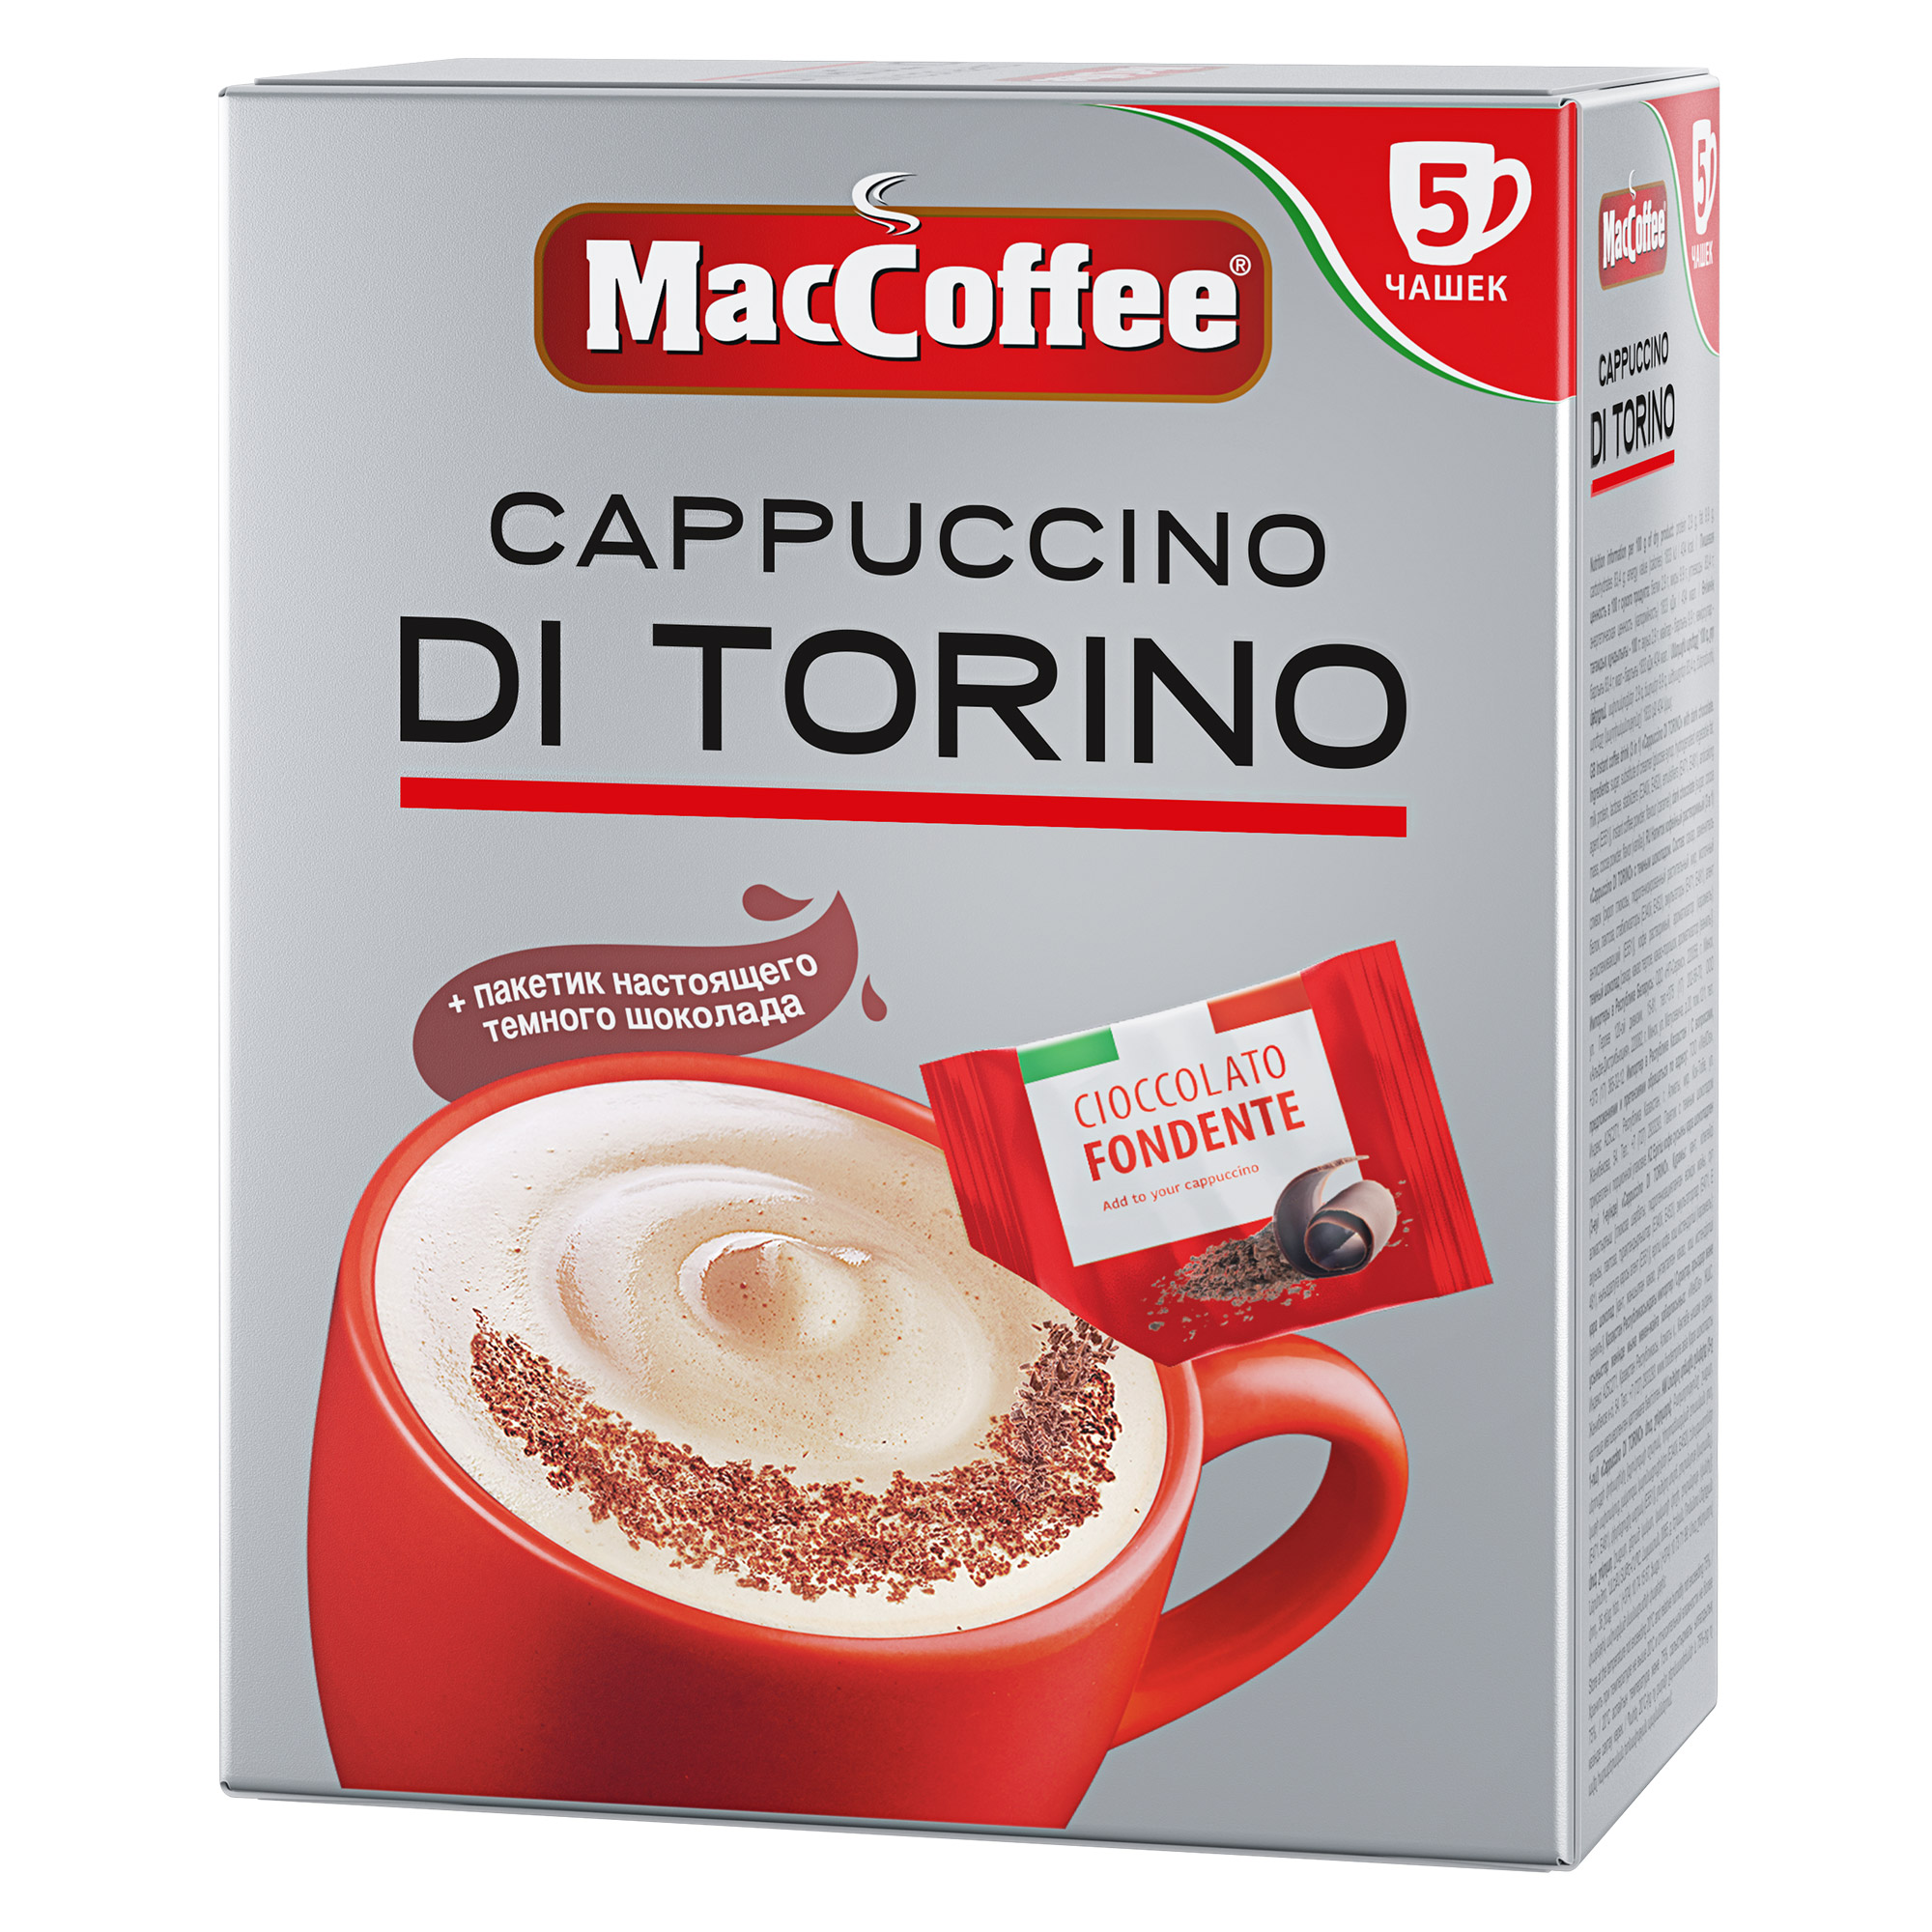 Маккофе торино. Напиток кофейный MACCOFFEE Cappuccino di Torino 3в1. Маккофе 3 в 1 капучино di Torino. Кофе MACCOFFEE Cappuccino di Torino с шоколадом. Кофе 3 в 1 с шоколадной крошкой MACCOFFEE.